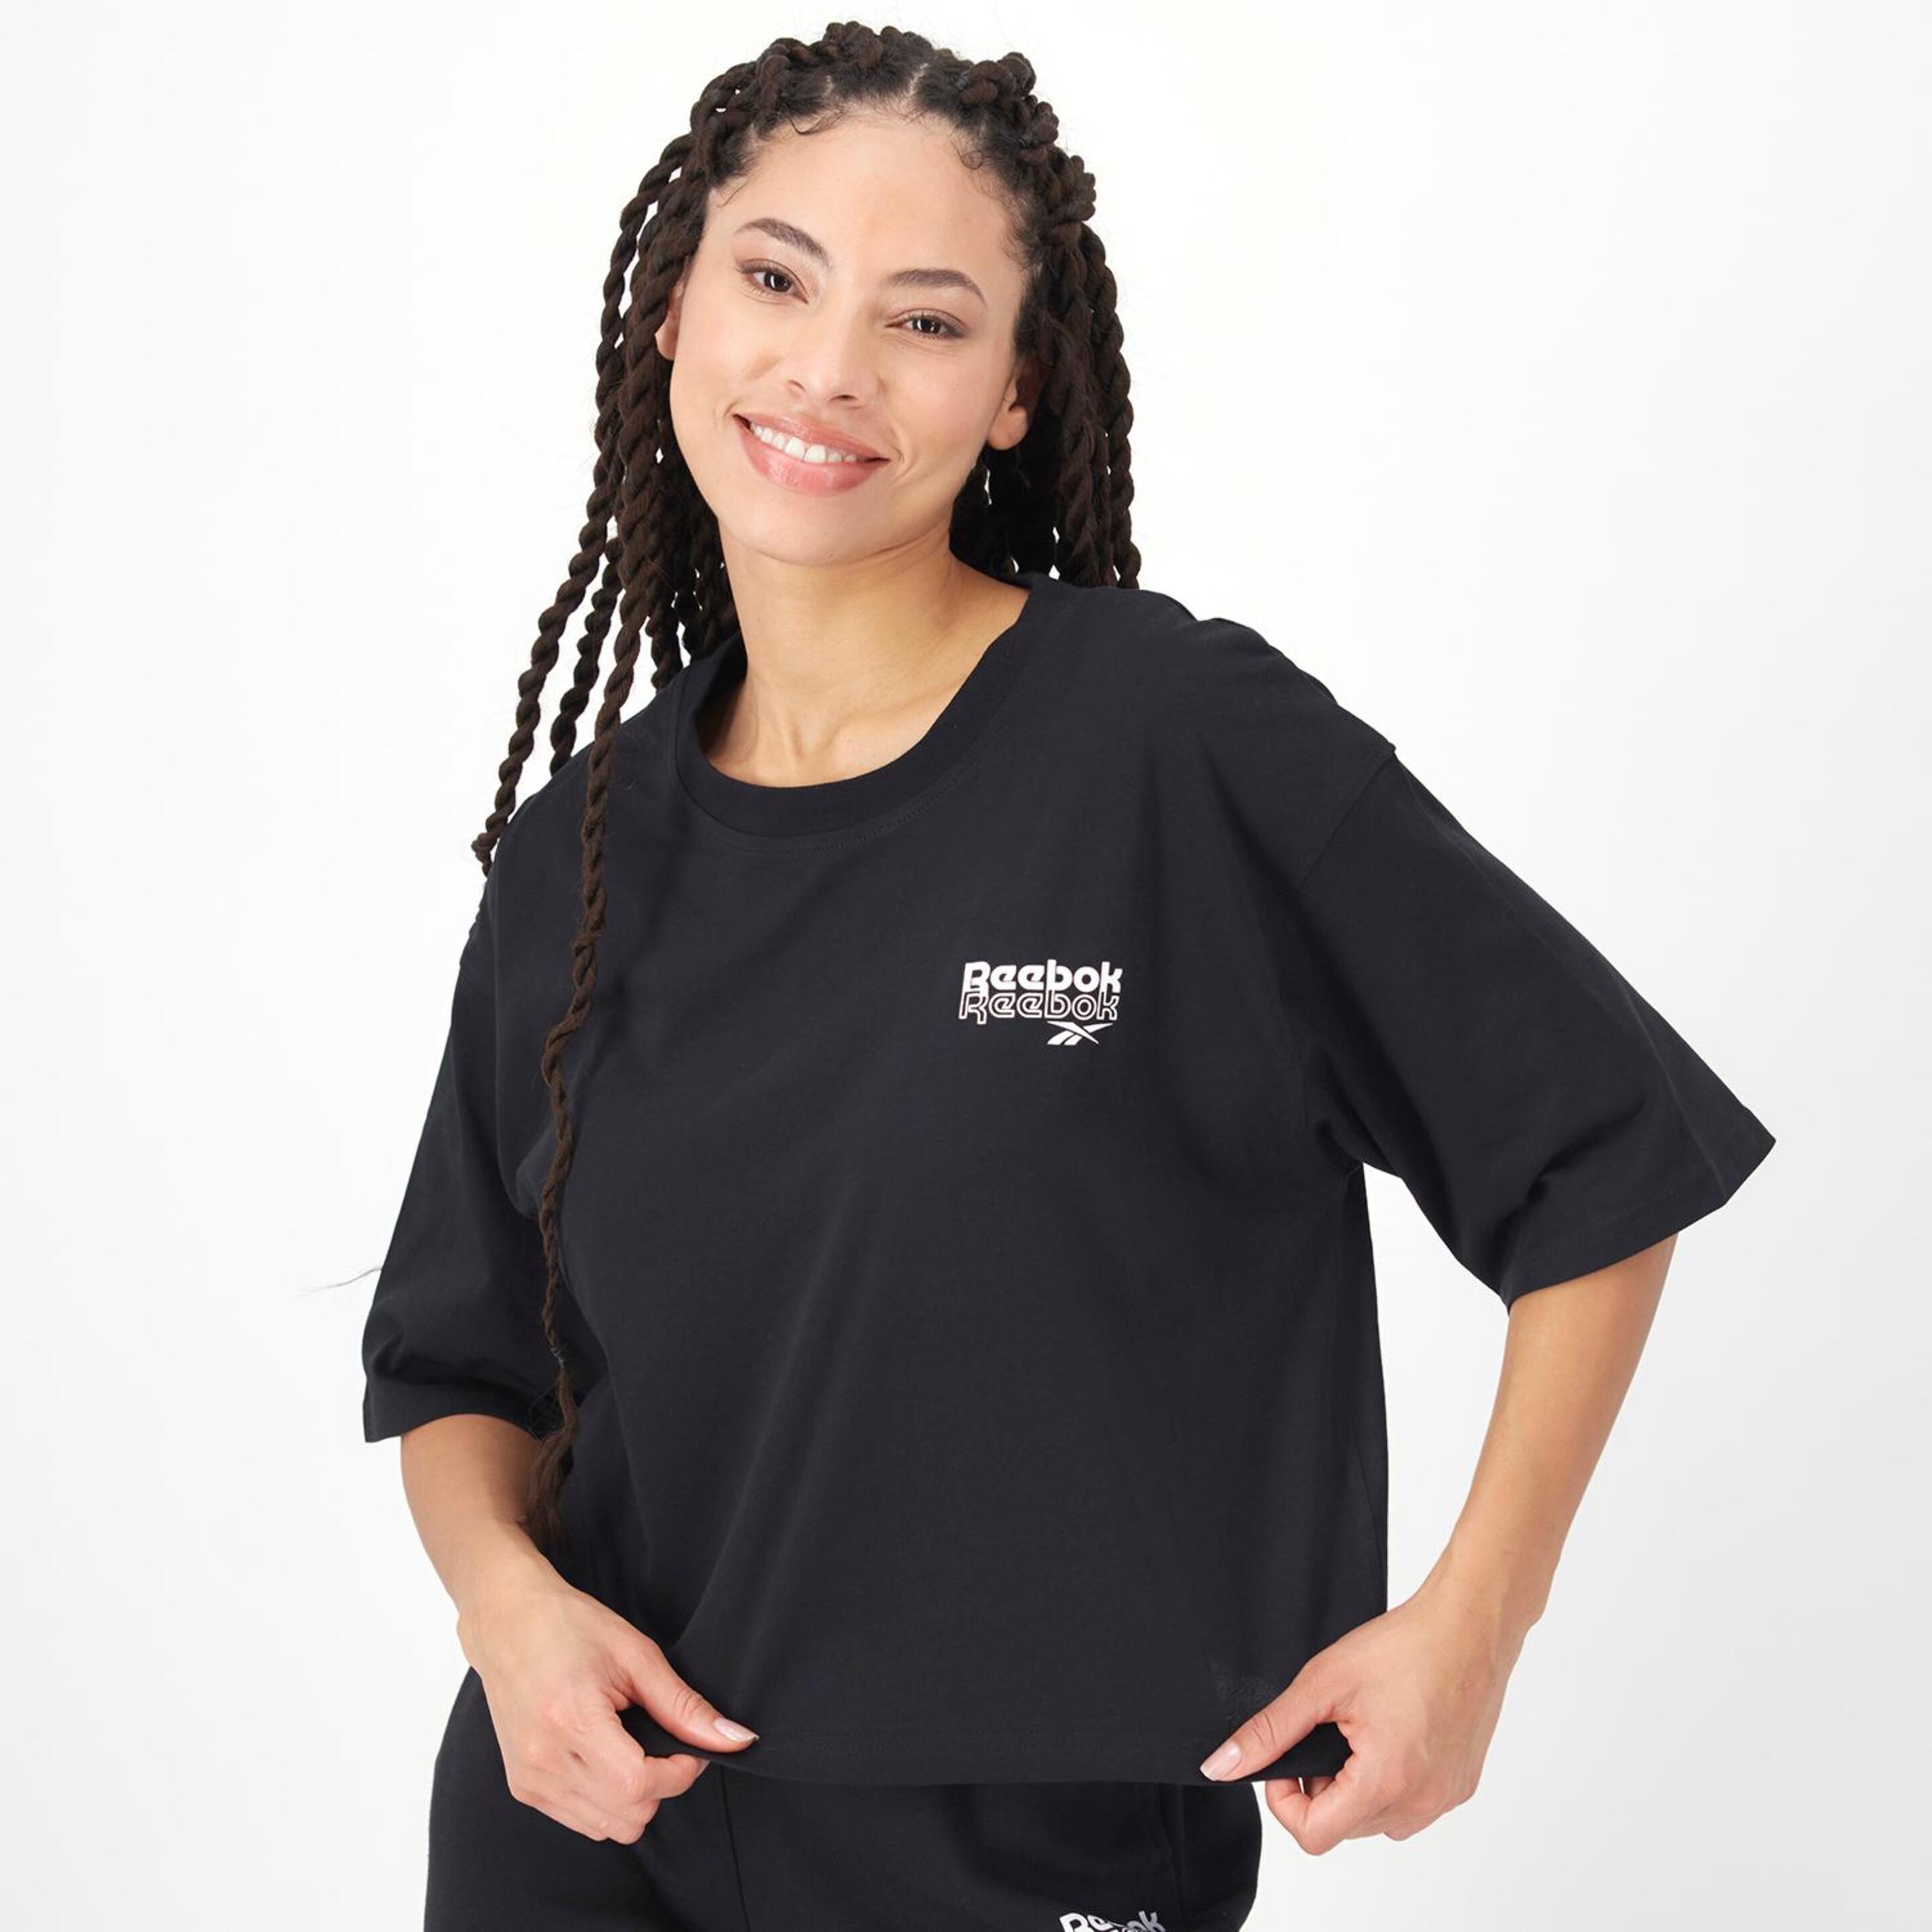 Reebok Rie - negro - Camiseta Boxy Mujer